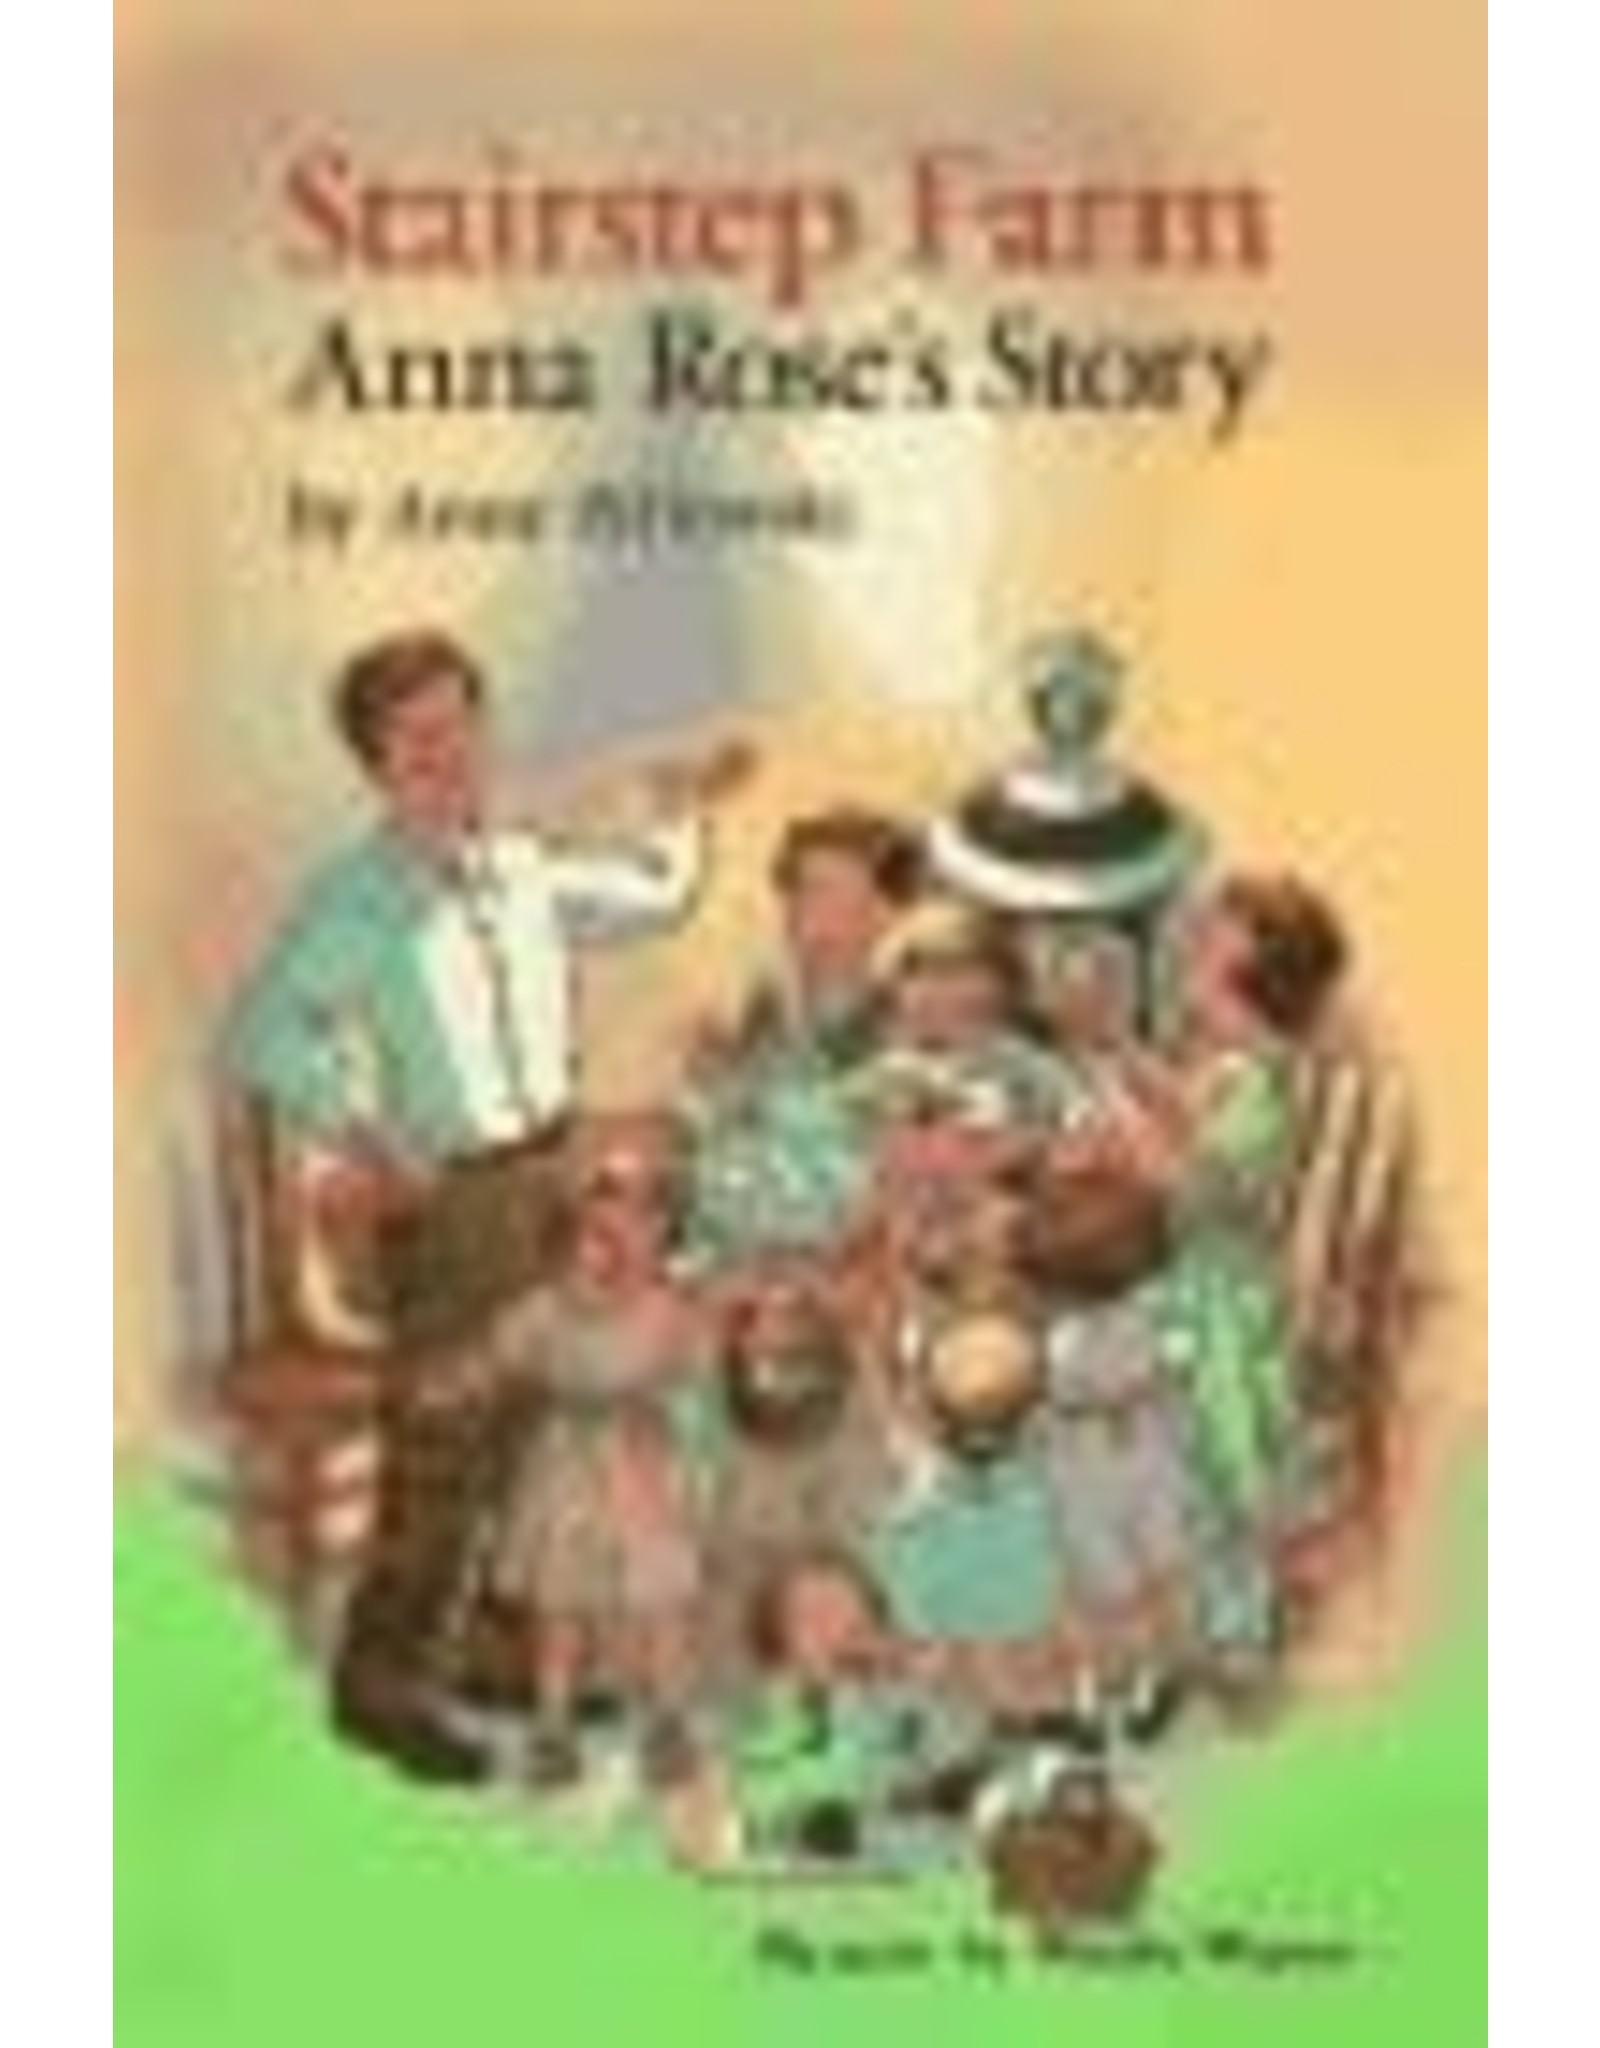 Saint Mary's Press Stairstep Farm: Anna Rose's Story by Anne Pellowski (Paperback)